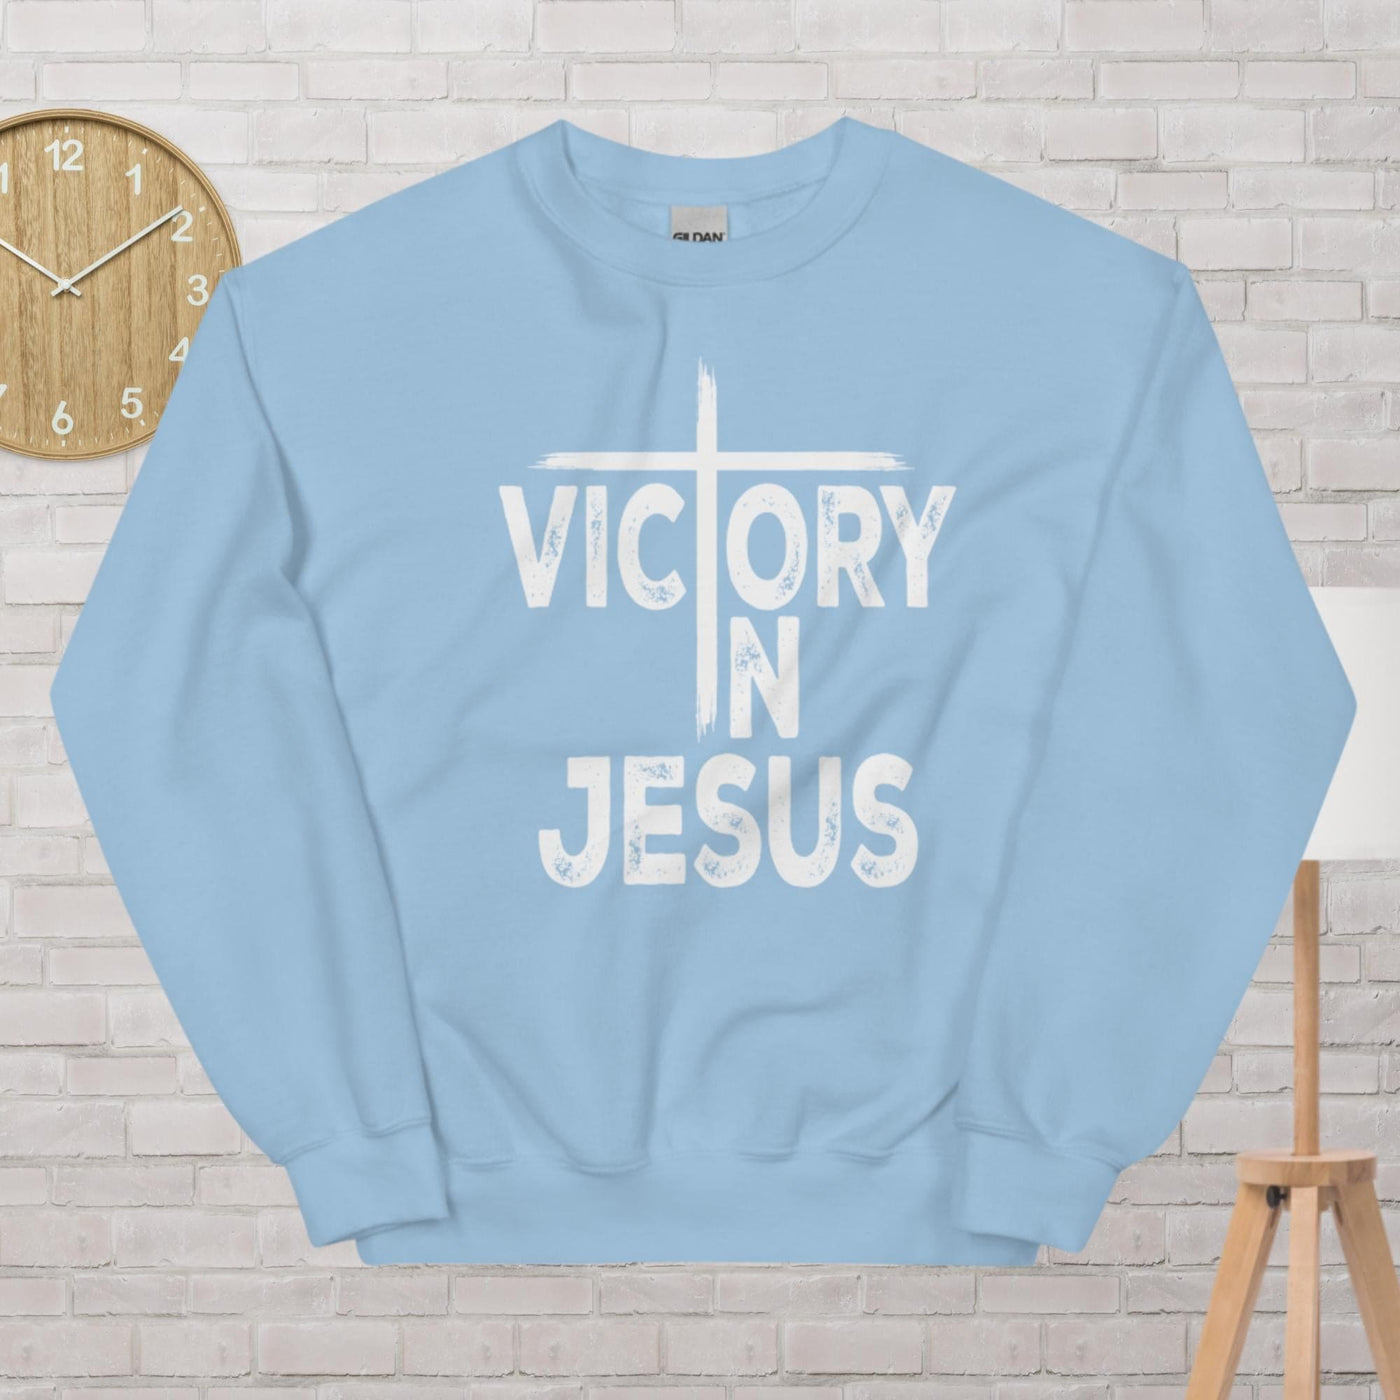 F&H Christian Victory in Jesus Unisex Sweatshirt